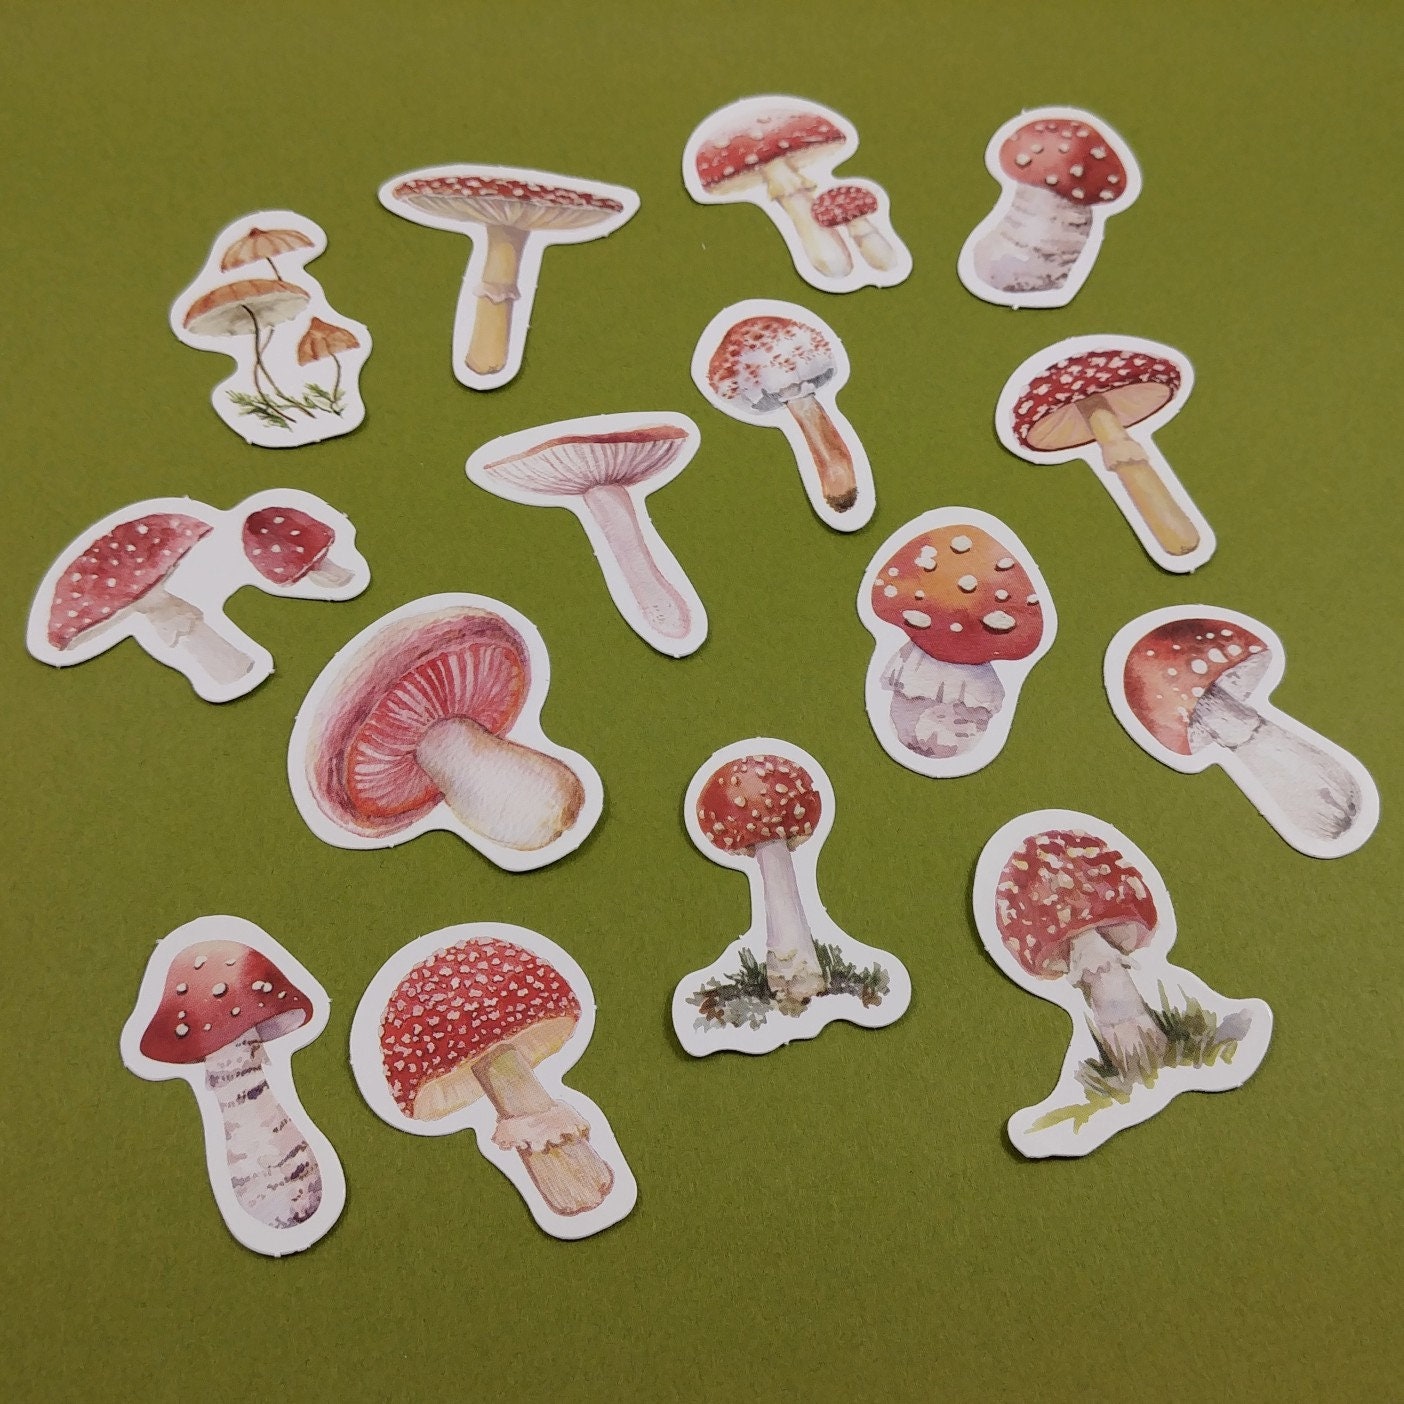 Red mushroom sticker pack - 15 cute botanical stickers - Cottagecore journal planner